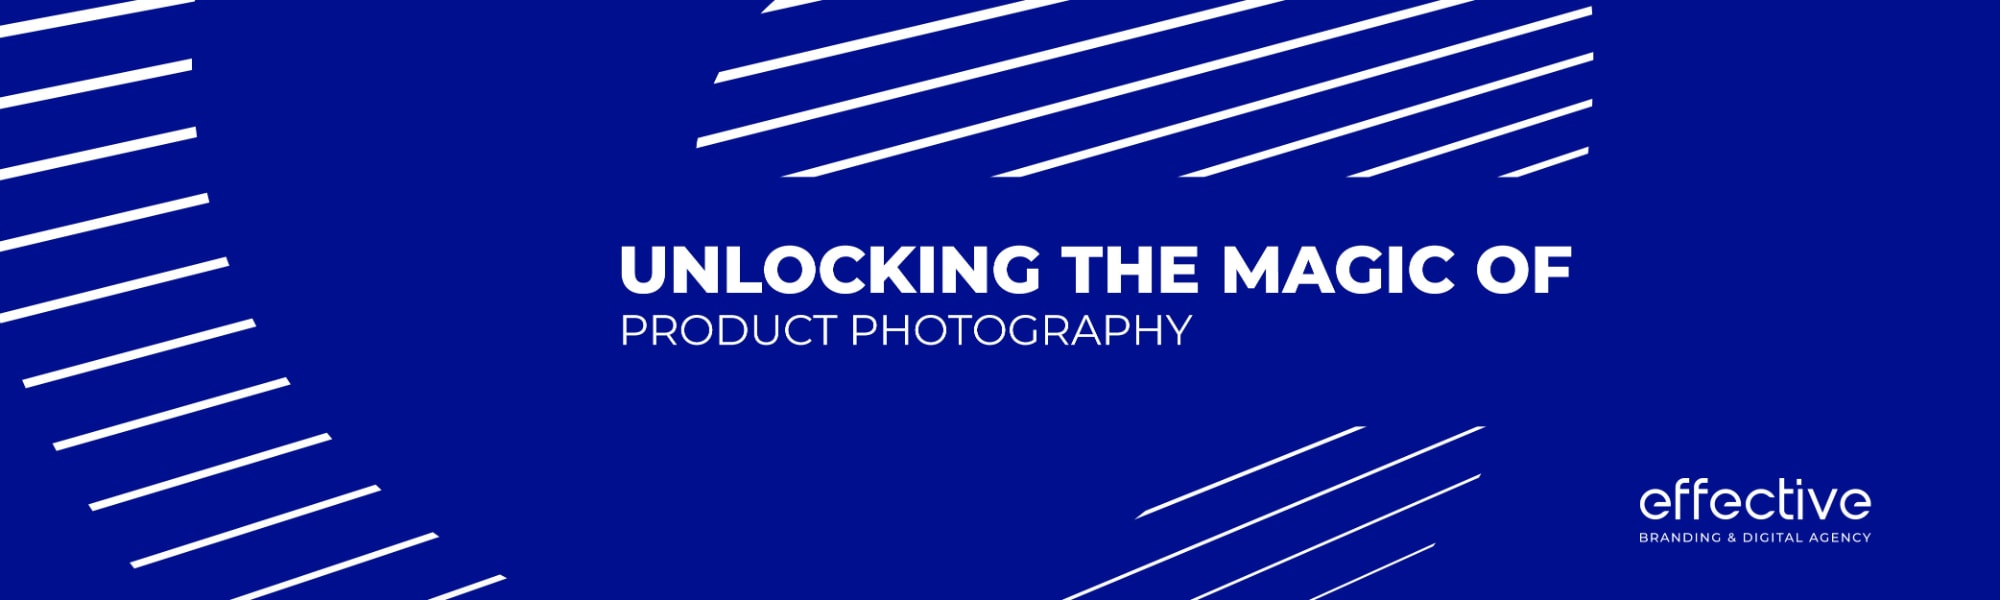 Unlocking the Magic of Product Photography